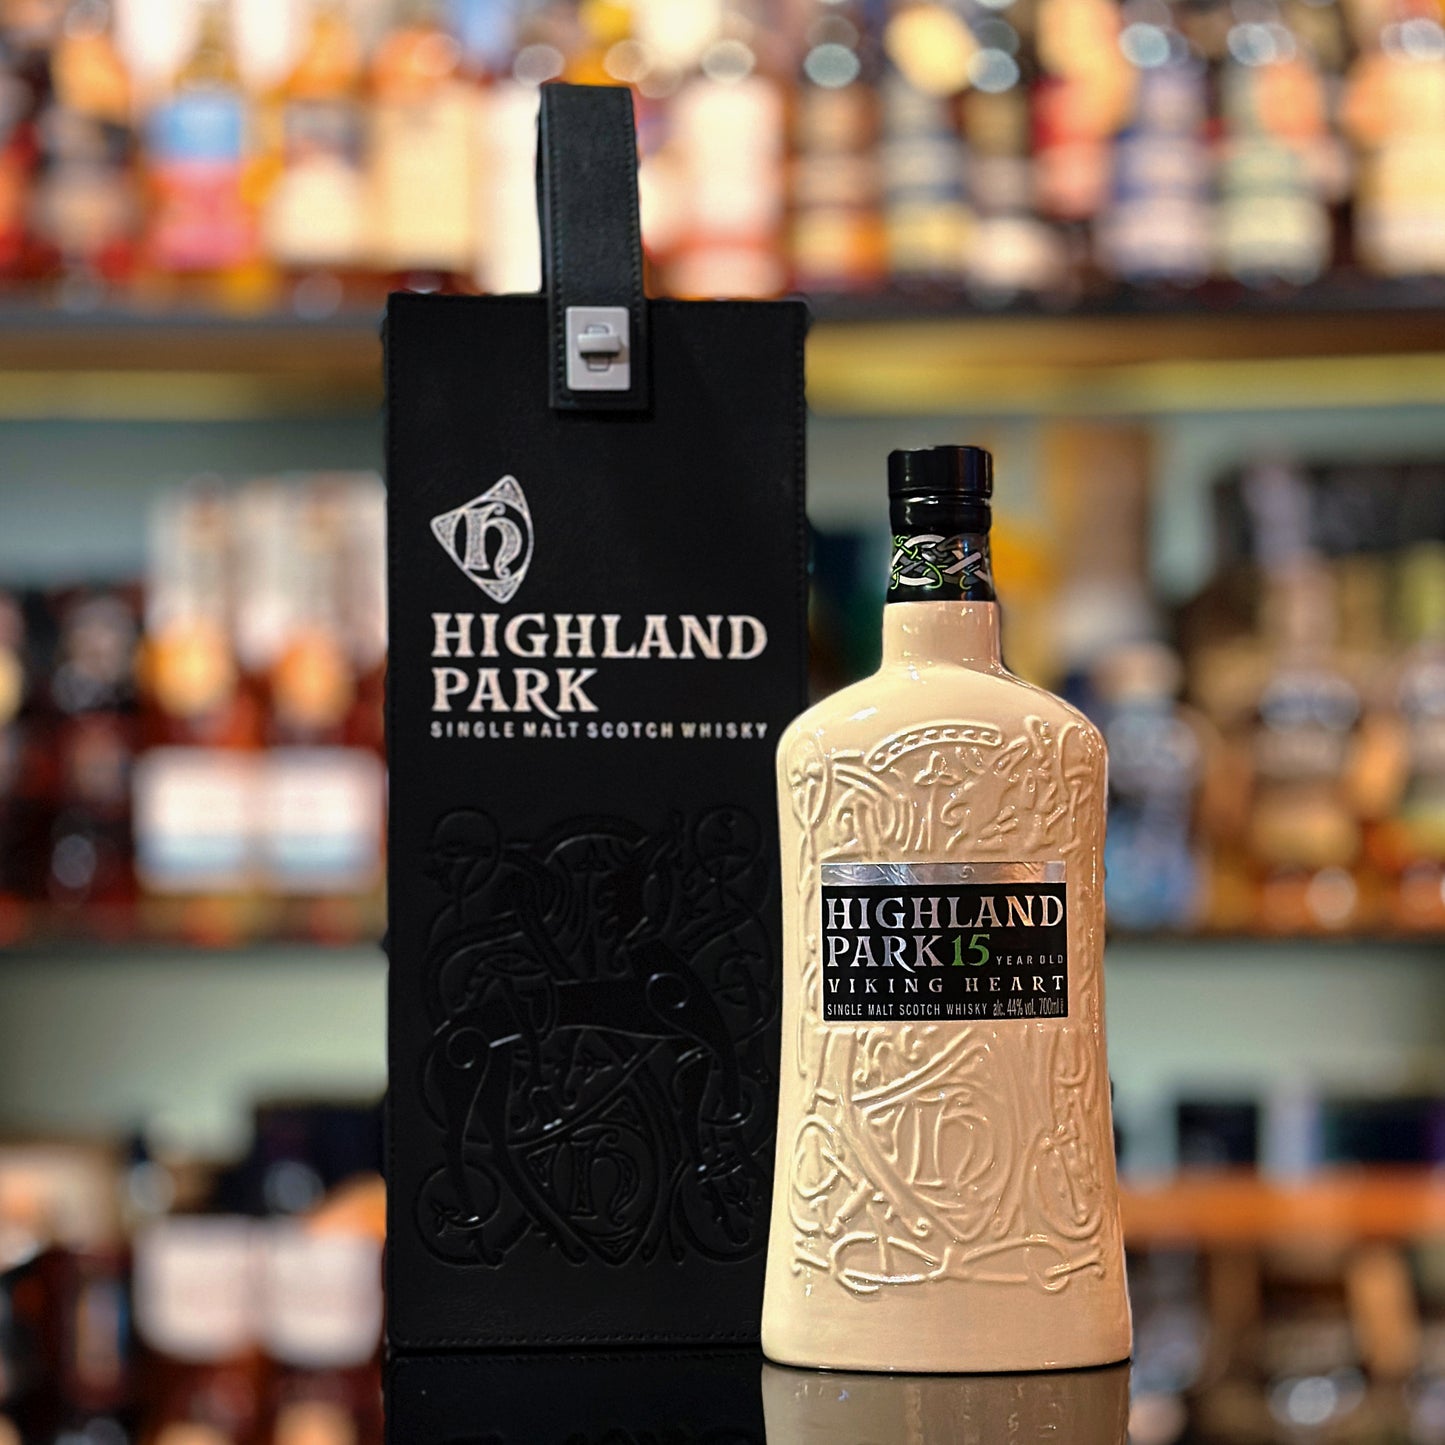 Highland Park 15 Year Old “Viking Heart” Single Malt Scotch Whisky